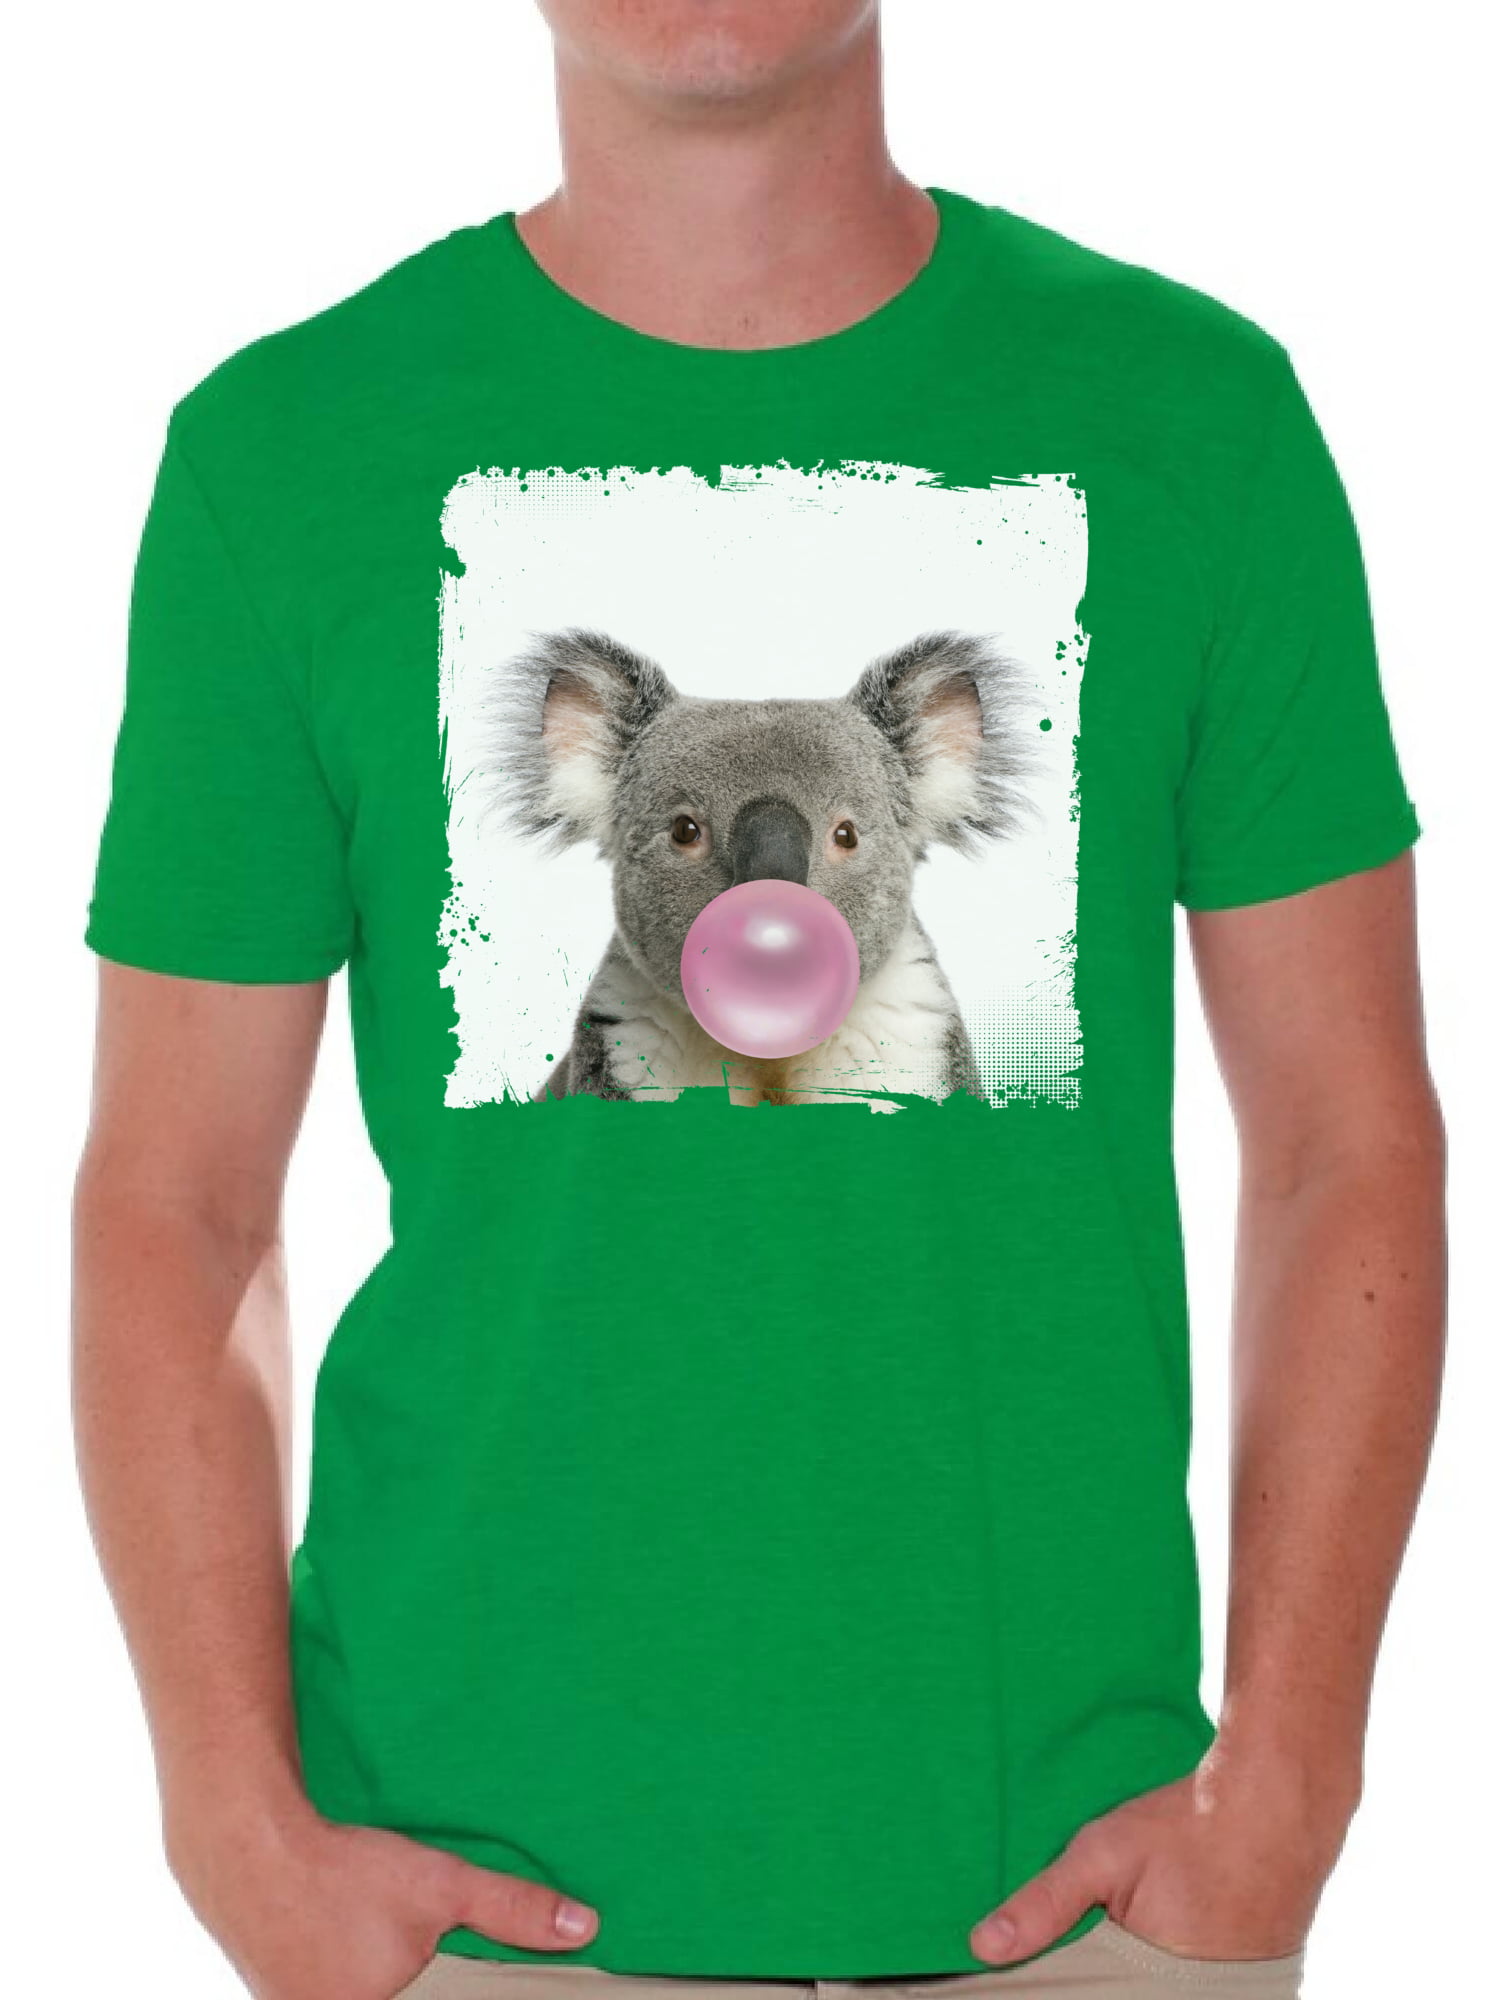 Koala Tshirt Girls Women Cotton Tshirts Loose Fit Graphic Short Sleeve Tops Shirts Cute Tees Animal Koala Lover Gifts